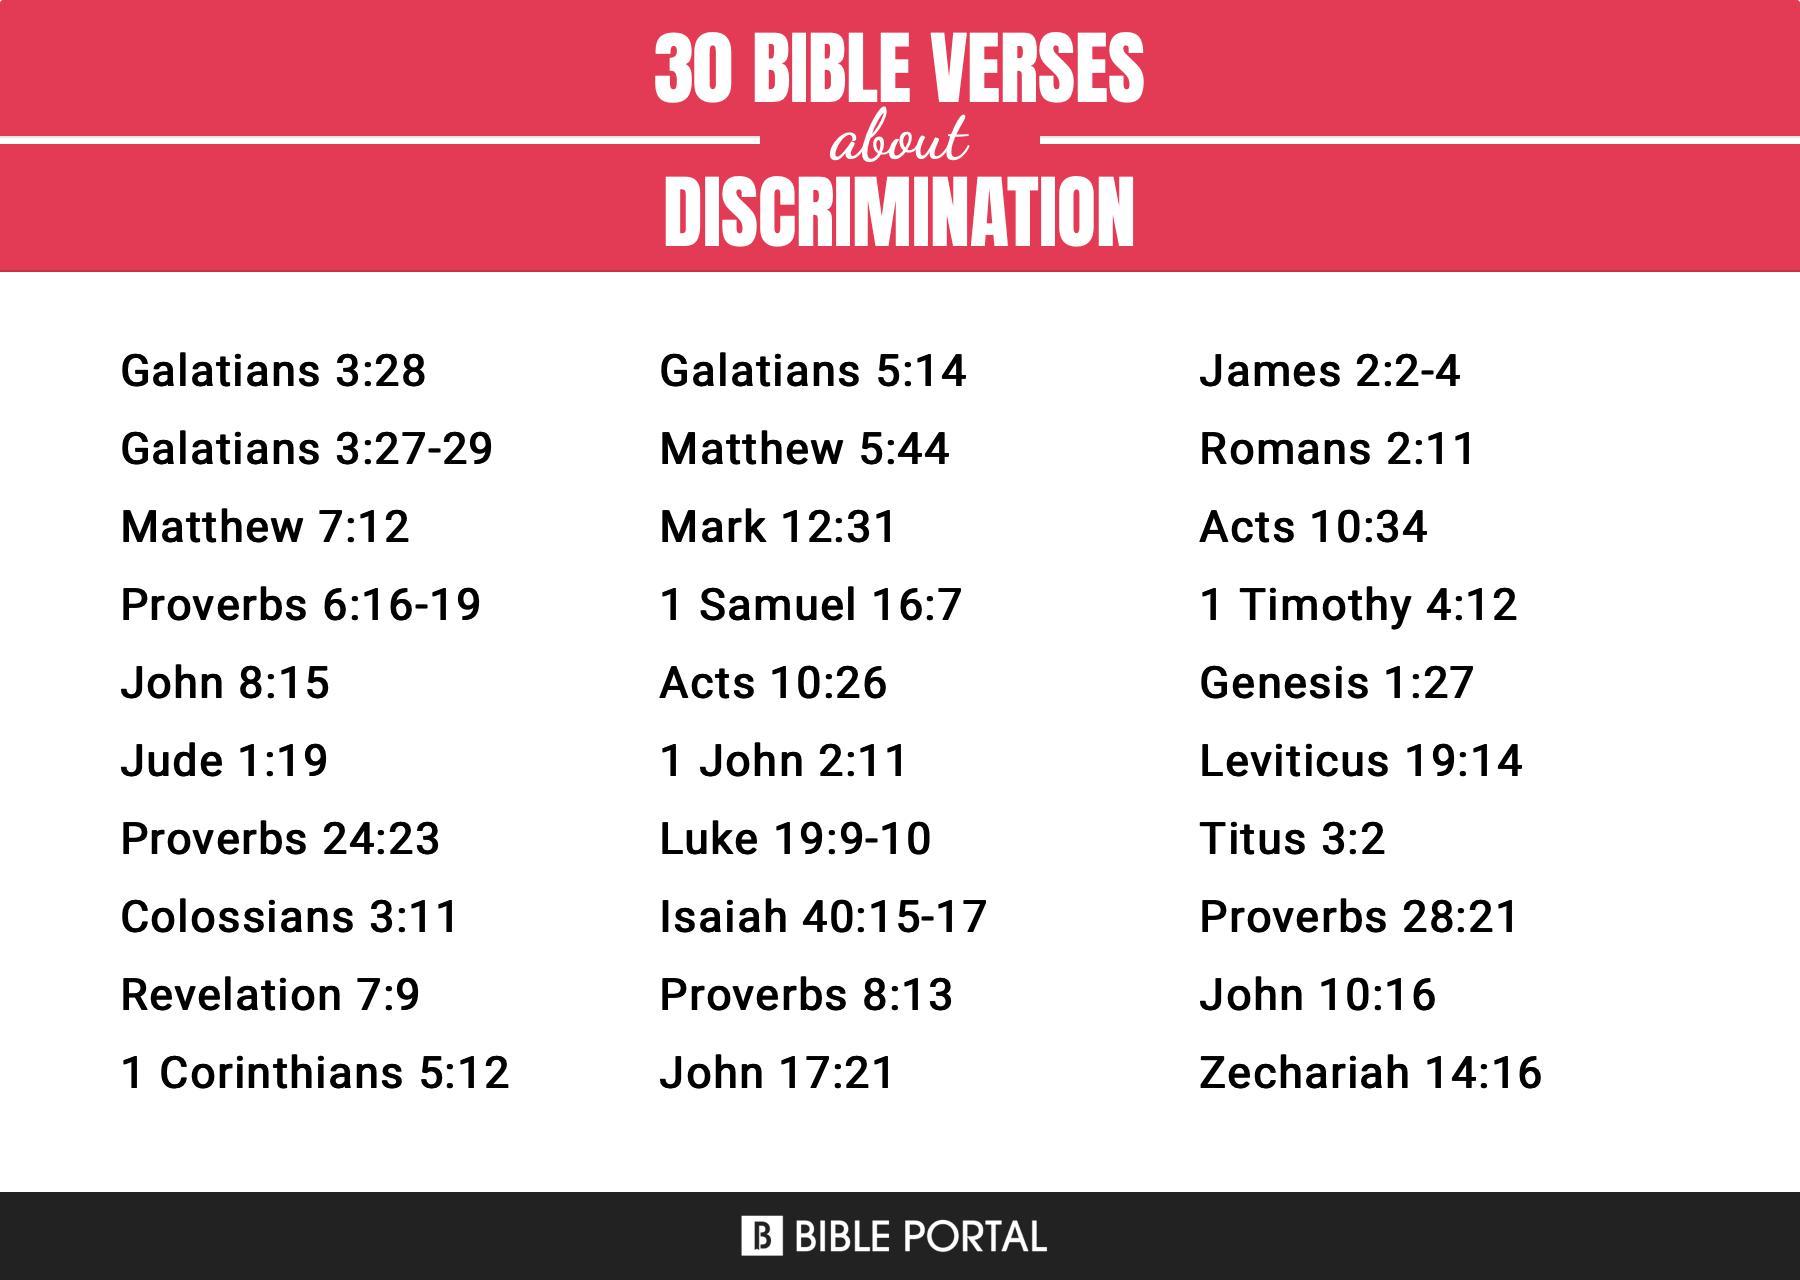 56 Bible Verses about Discrimination